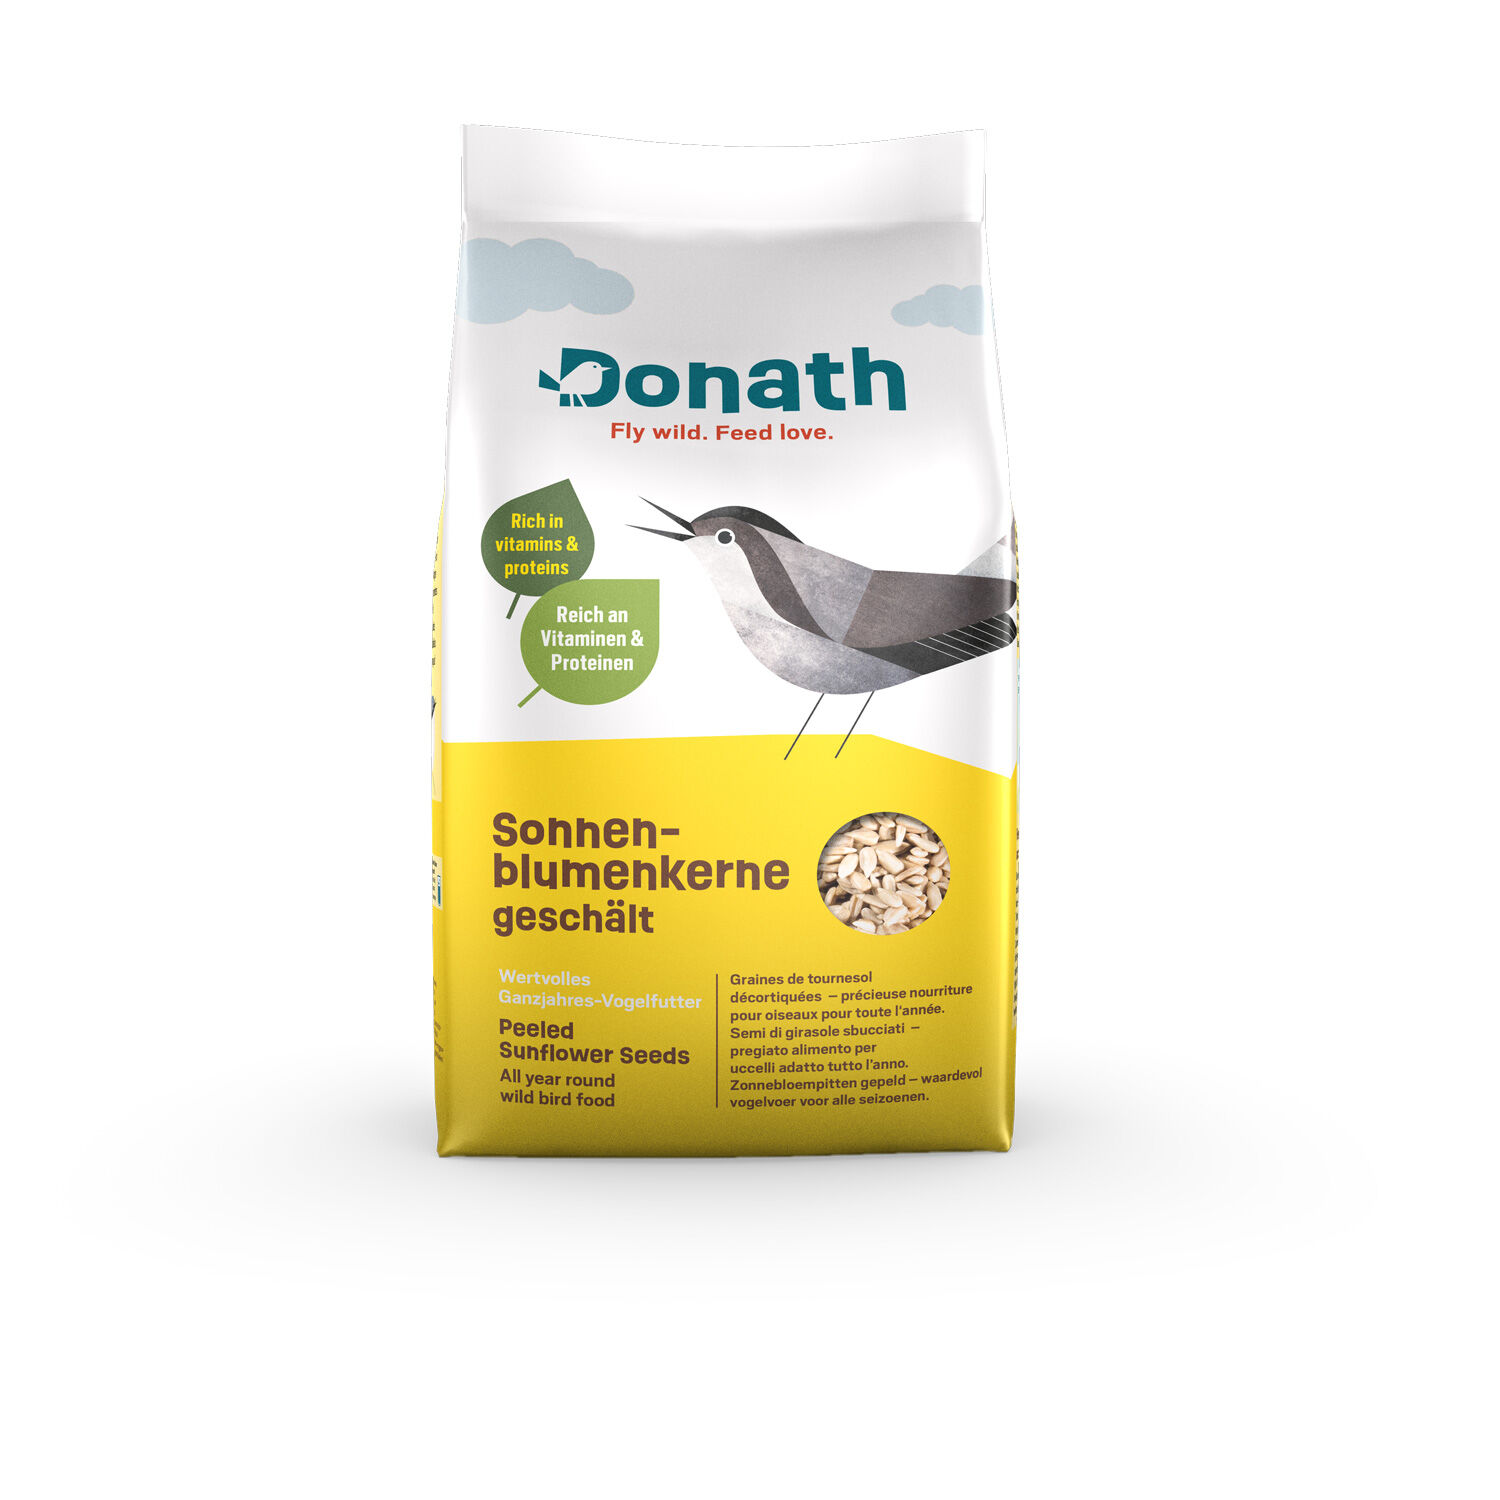 Donath-Sonneblumenkerne-geschaelt-Ganzjahresfutter-fuer-Wildvoegel-45-74005